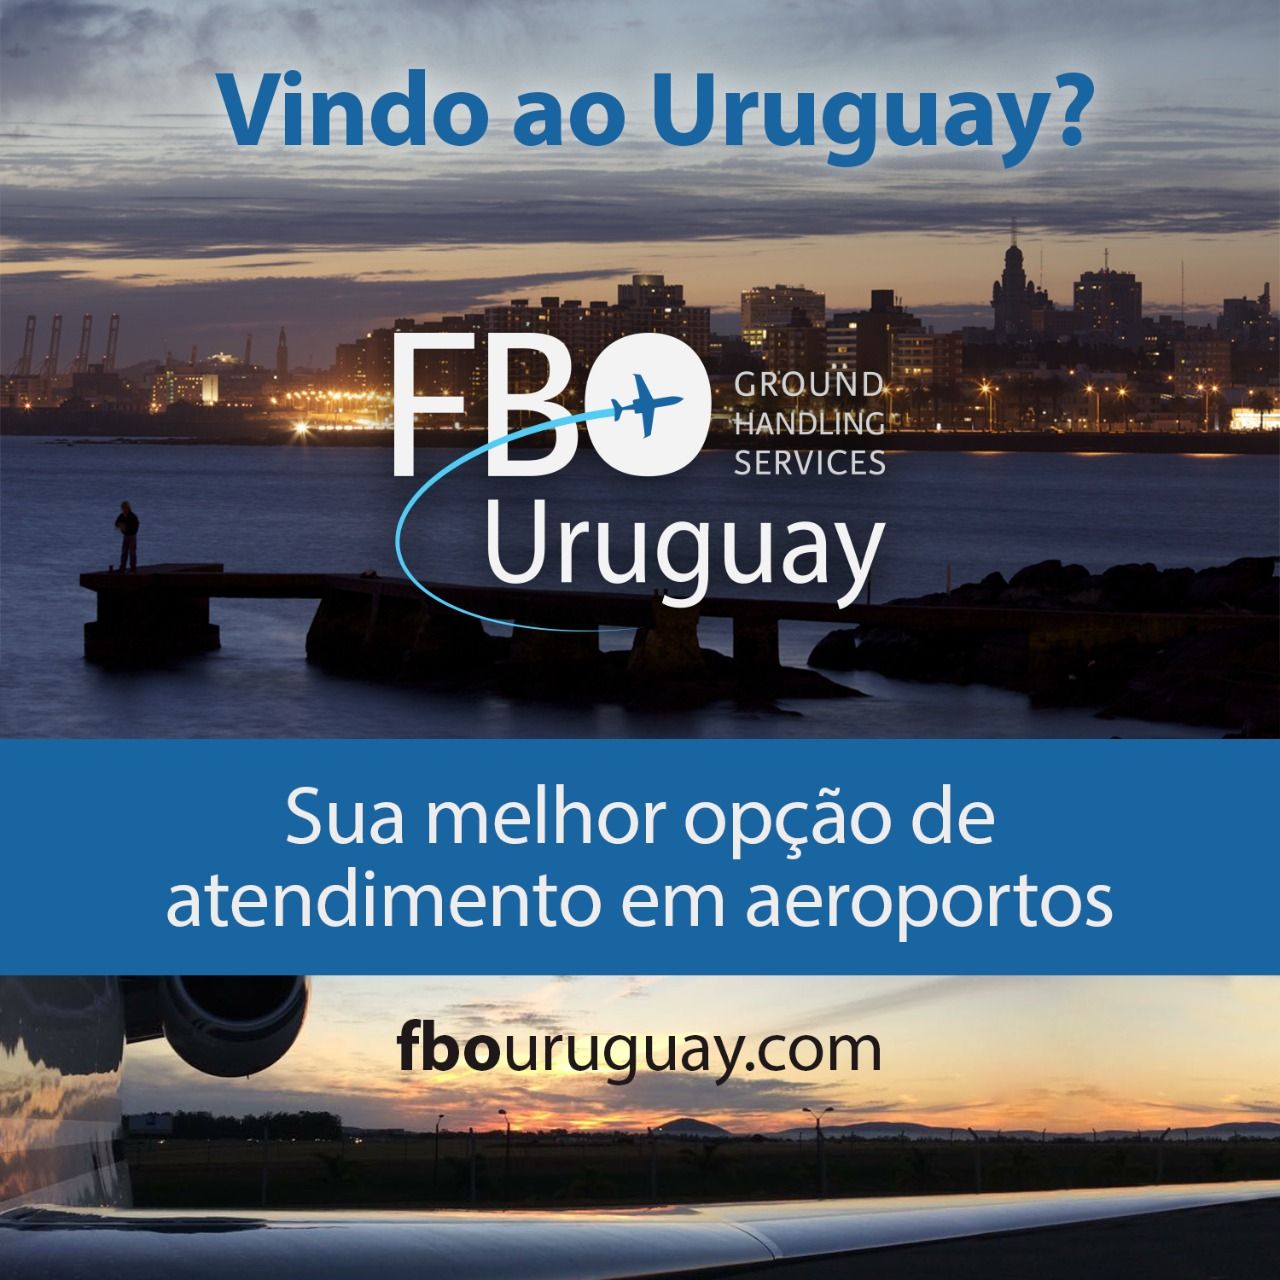 FBO URUGUAY